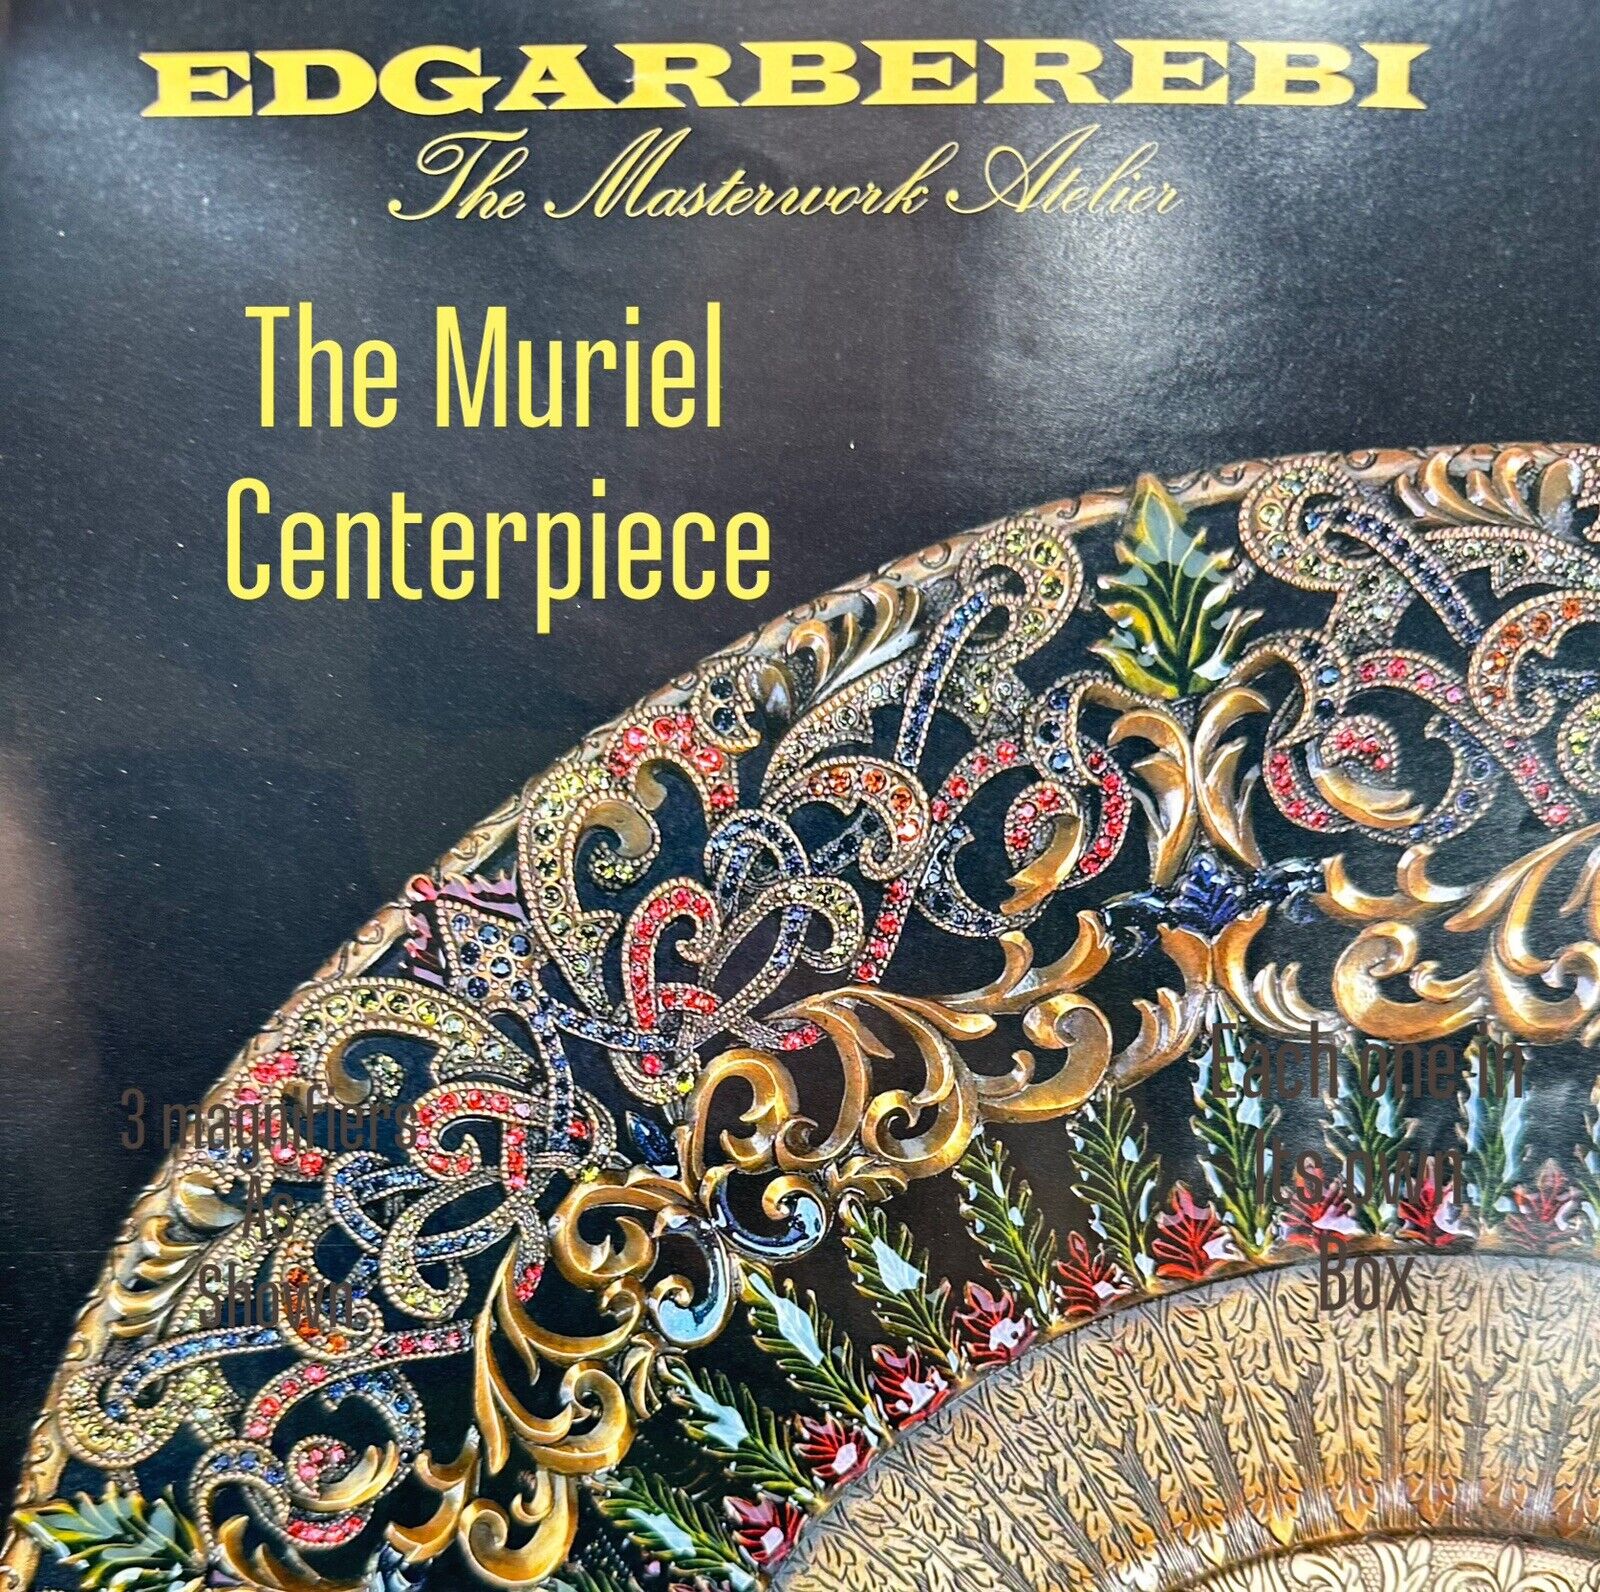 I Am Edgar Berebi Muriel Center piece bowl, 7.5 pounds 14 inches wide 4.24